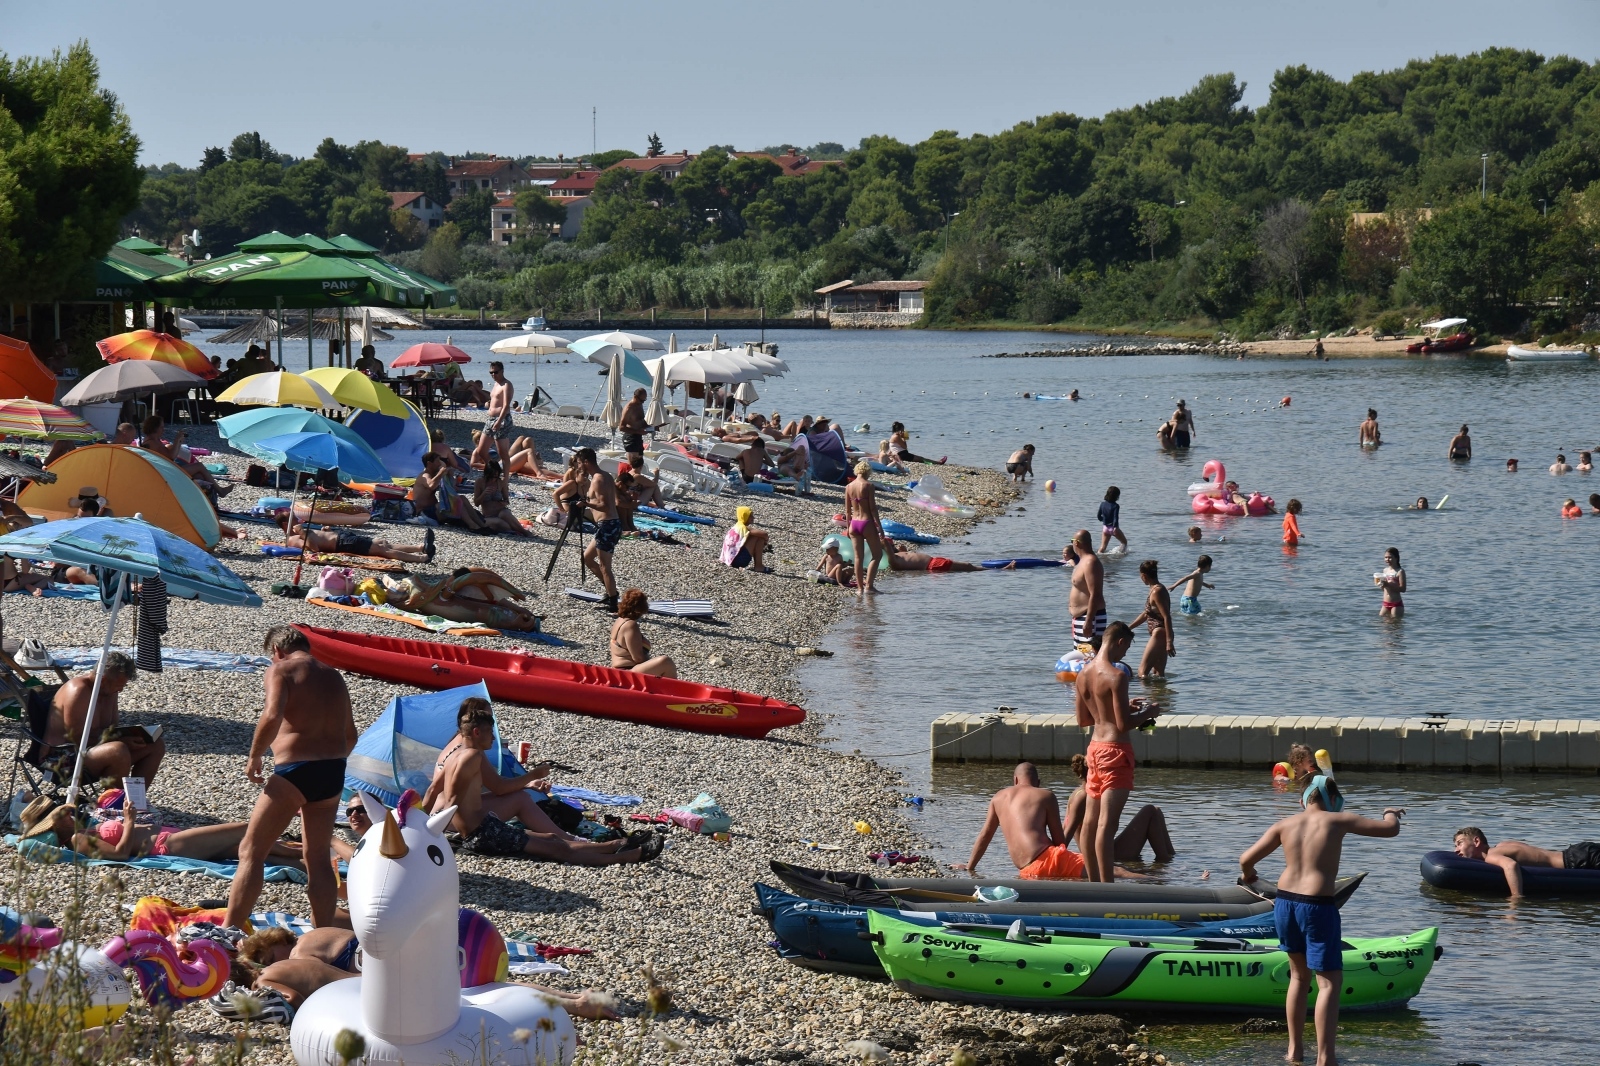 31.07.2019., Premantura - Sve plaze pune su kupaca. Photo: Dusko Marusic/PIXSELL